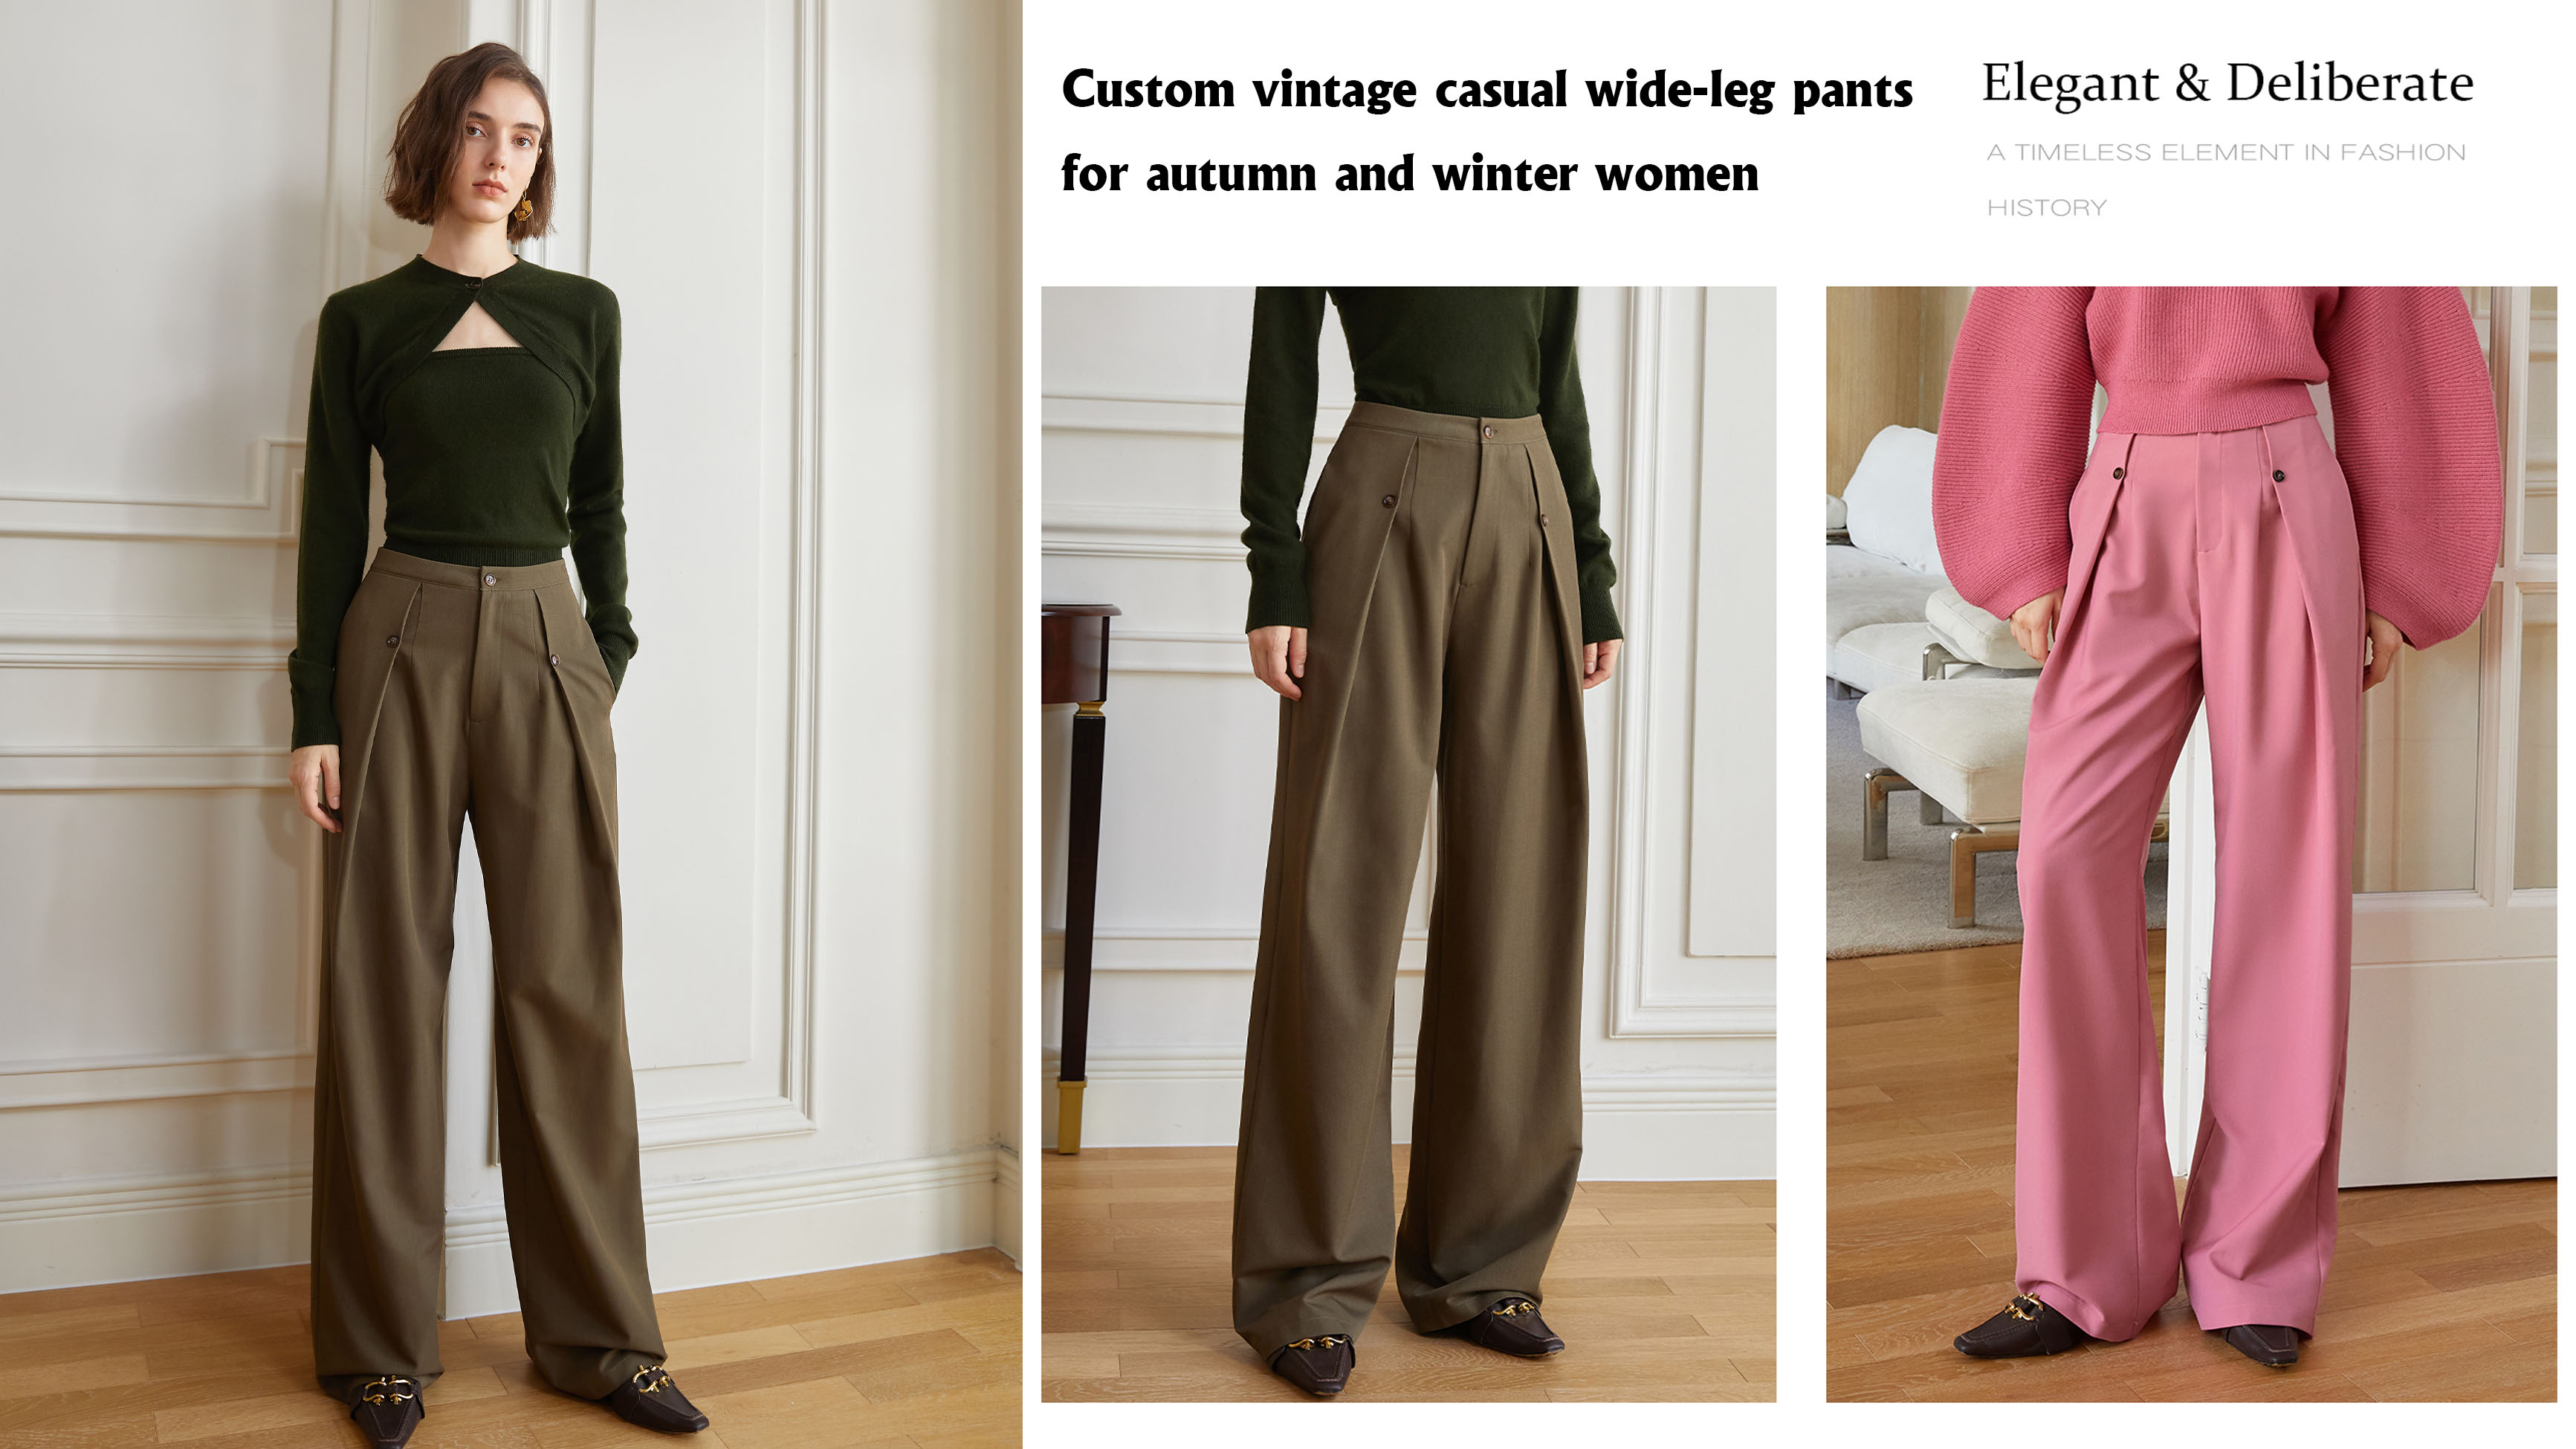 Pantalóns de perna ancha casual vintage a medida para mulleres